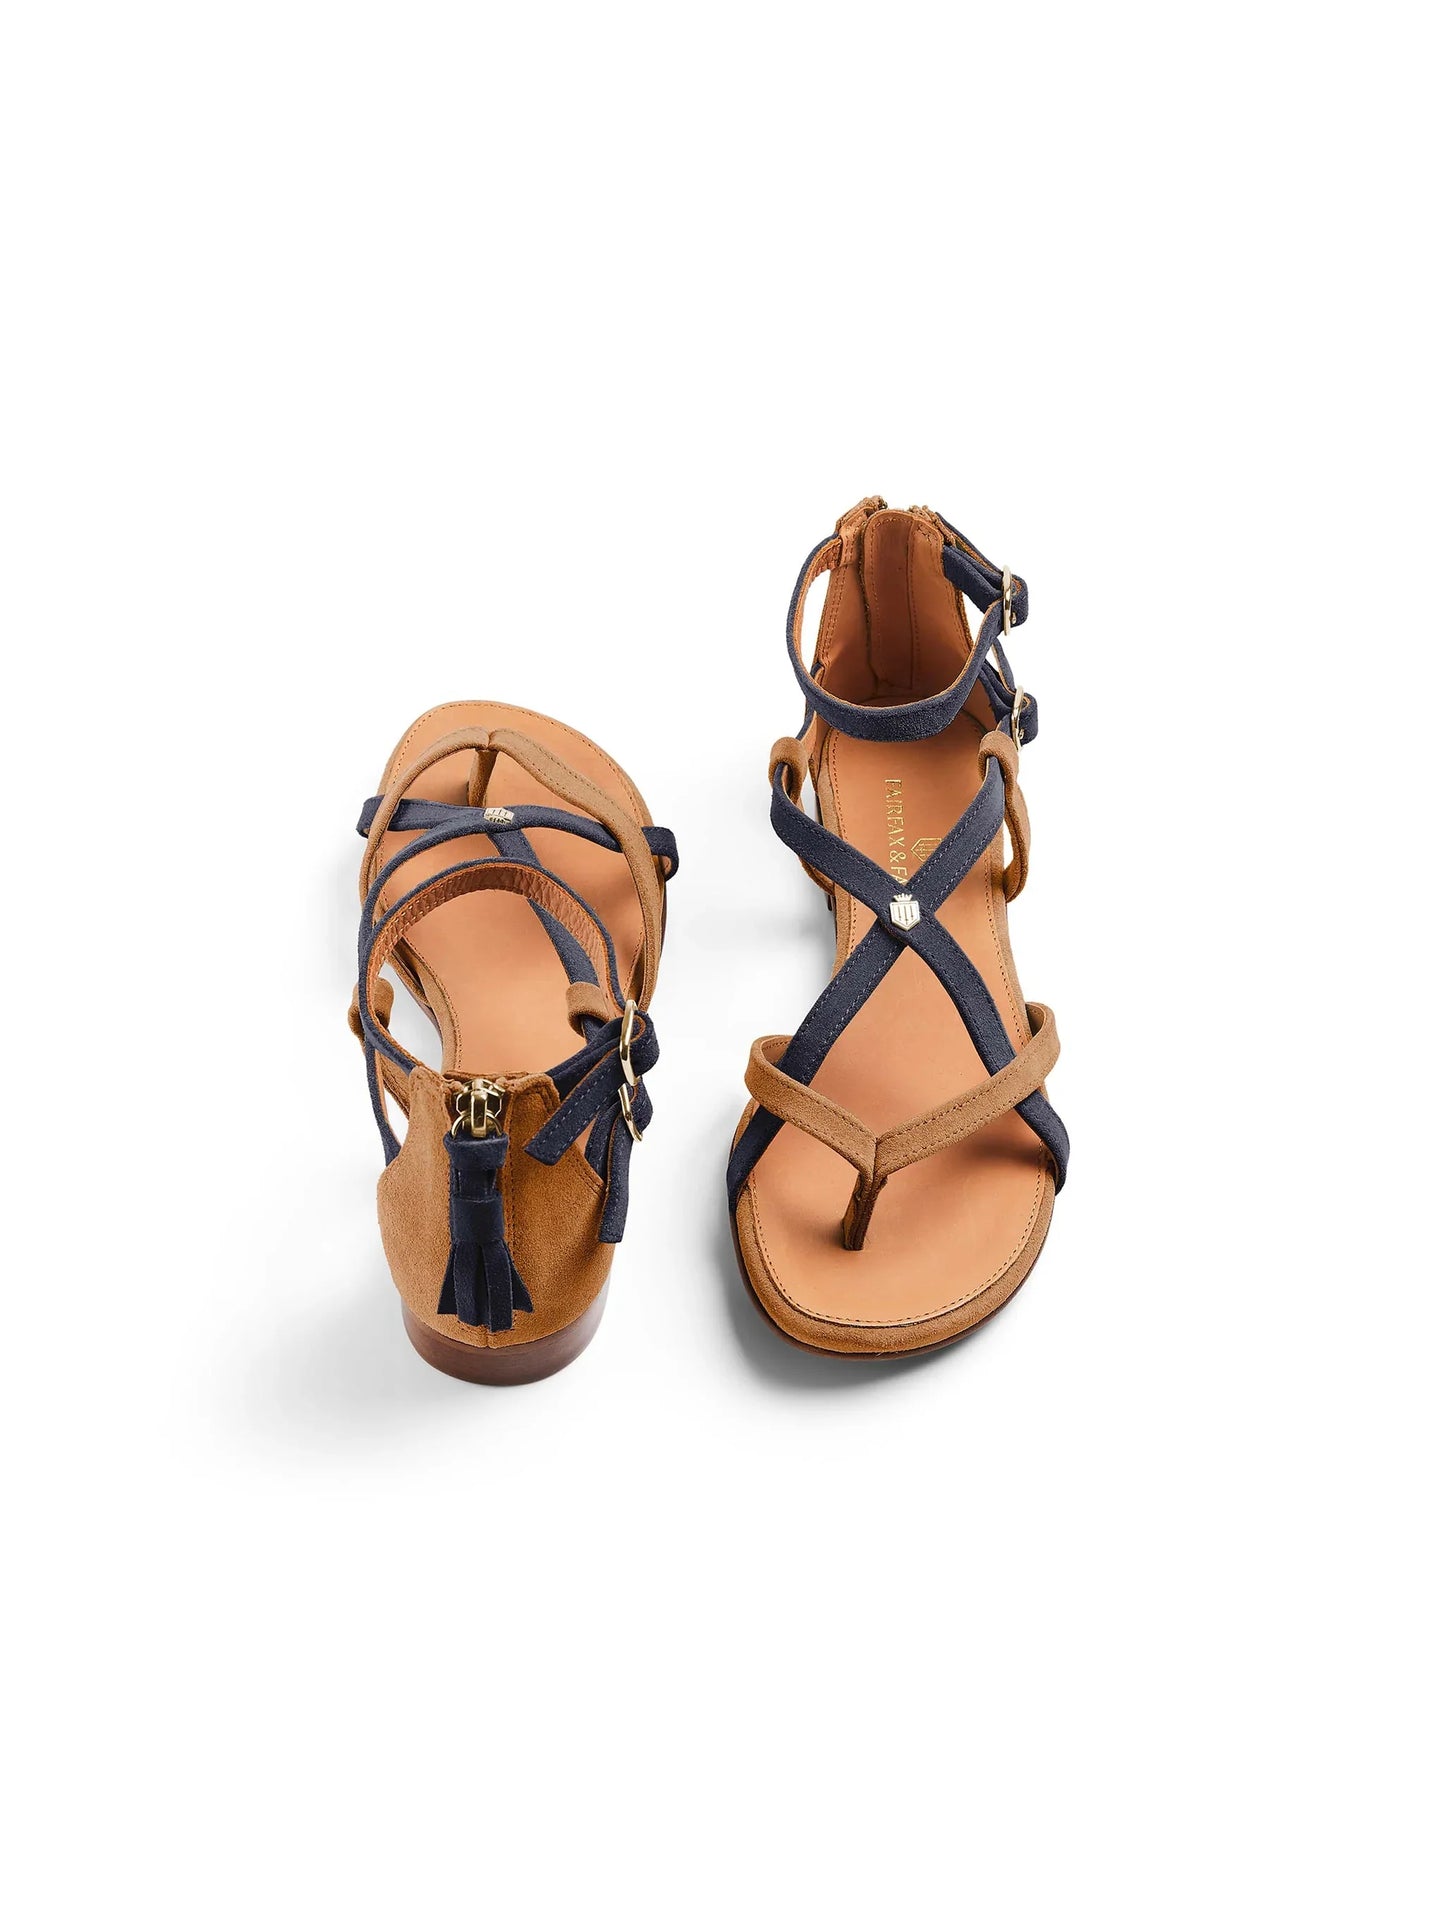 Brancaster sandal - tan / navy suede Shoes & Heels FAIRFAX